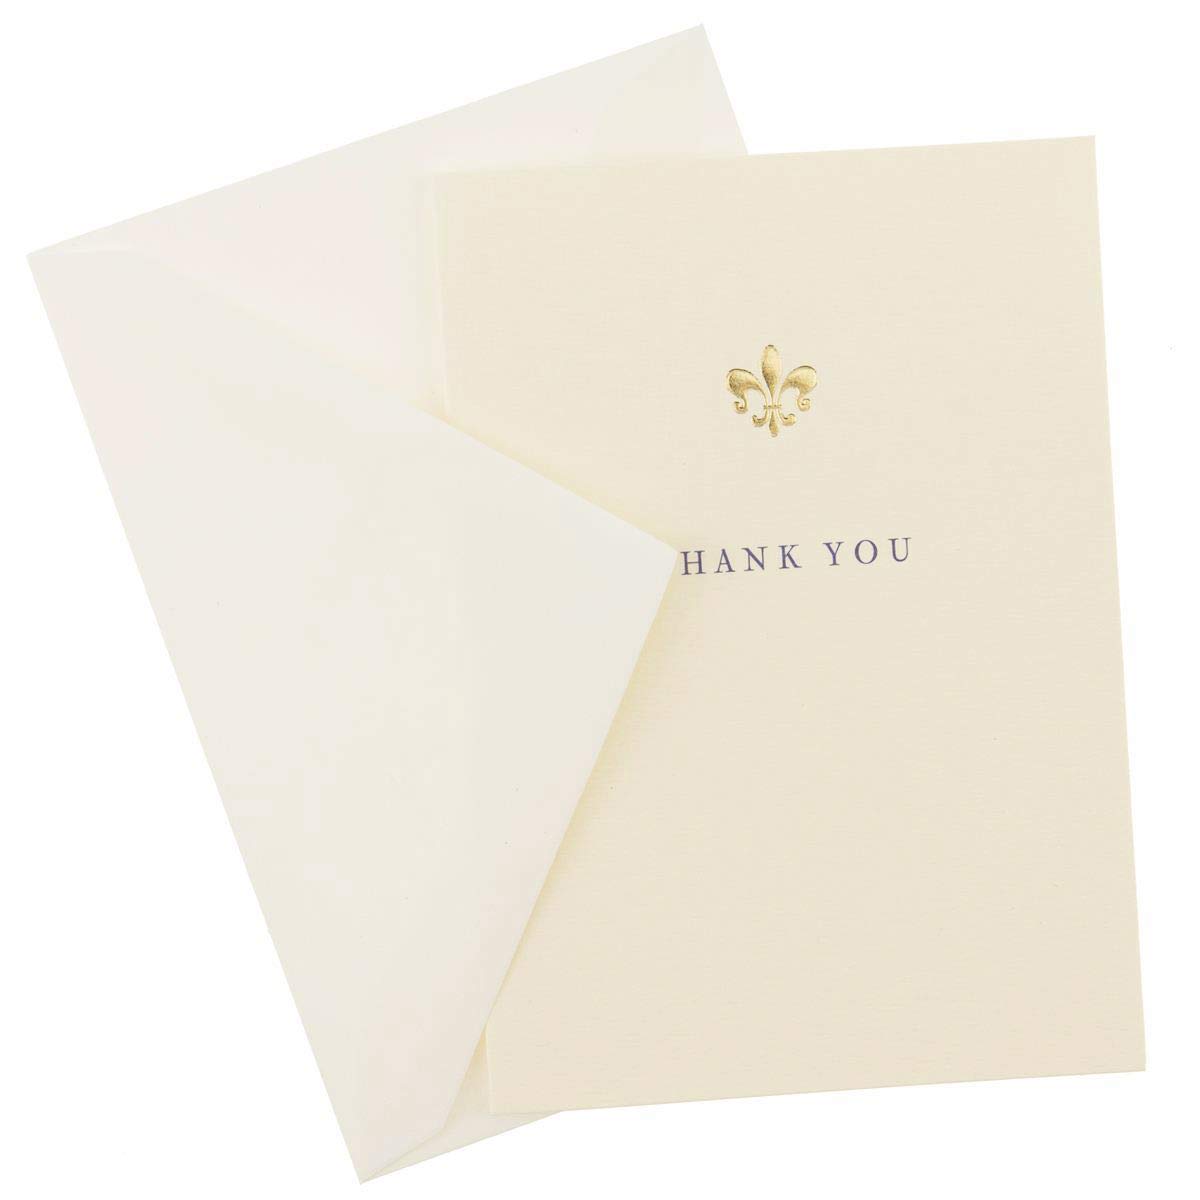 Graphique Fleur de Lis La Petite Presse Boxed Thank You Notes - 10 Embossed and Embellished Gold Foil Fleur de Lis Thank You Cards with Matching Envelopes, 3.25